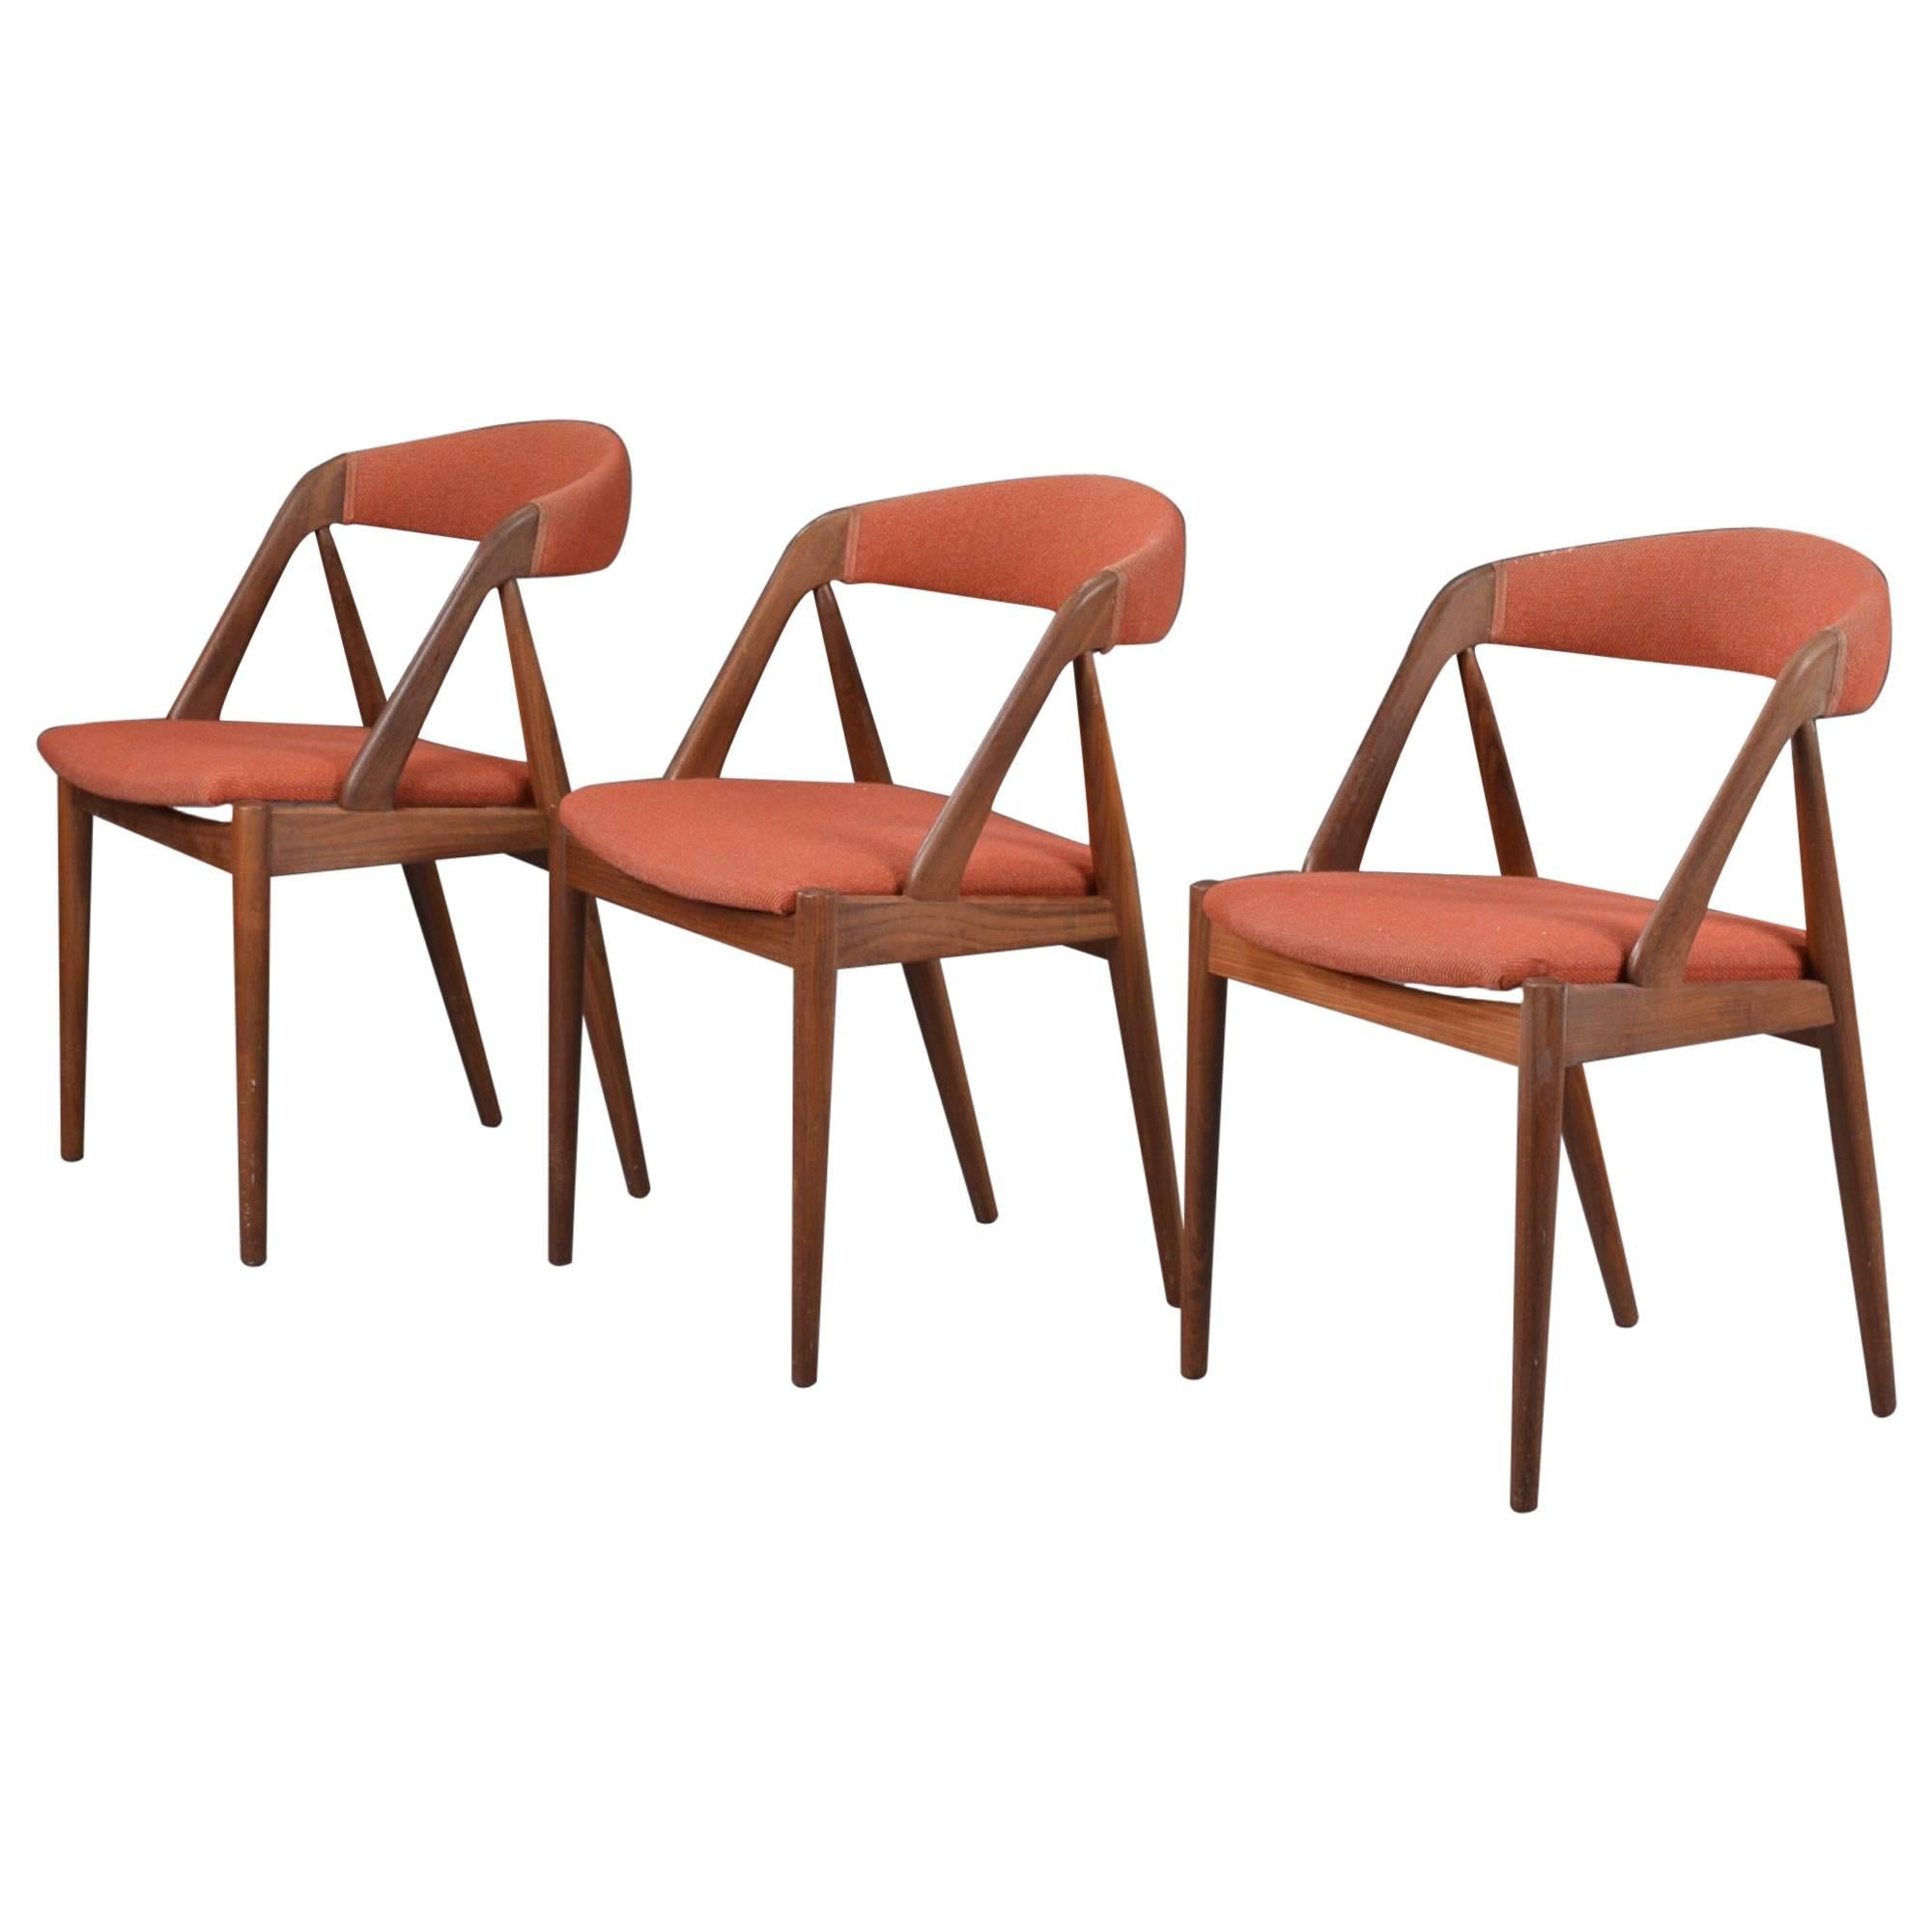 Three A-Frame Model 31 Chairs by Kai Kristiansen for Schou-Andersens Møbelfabrik